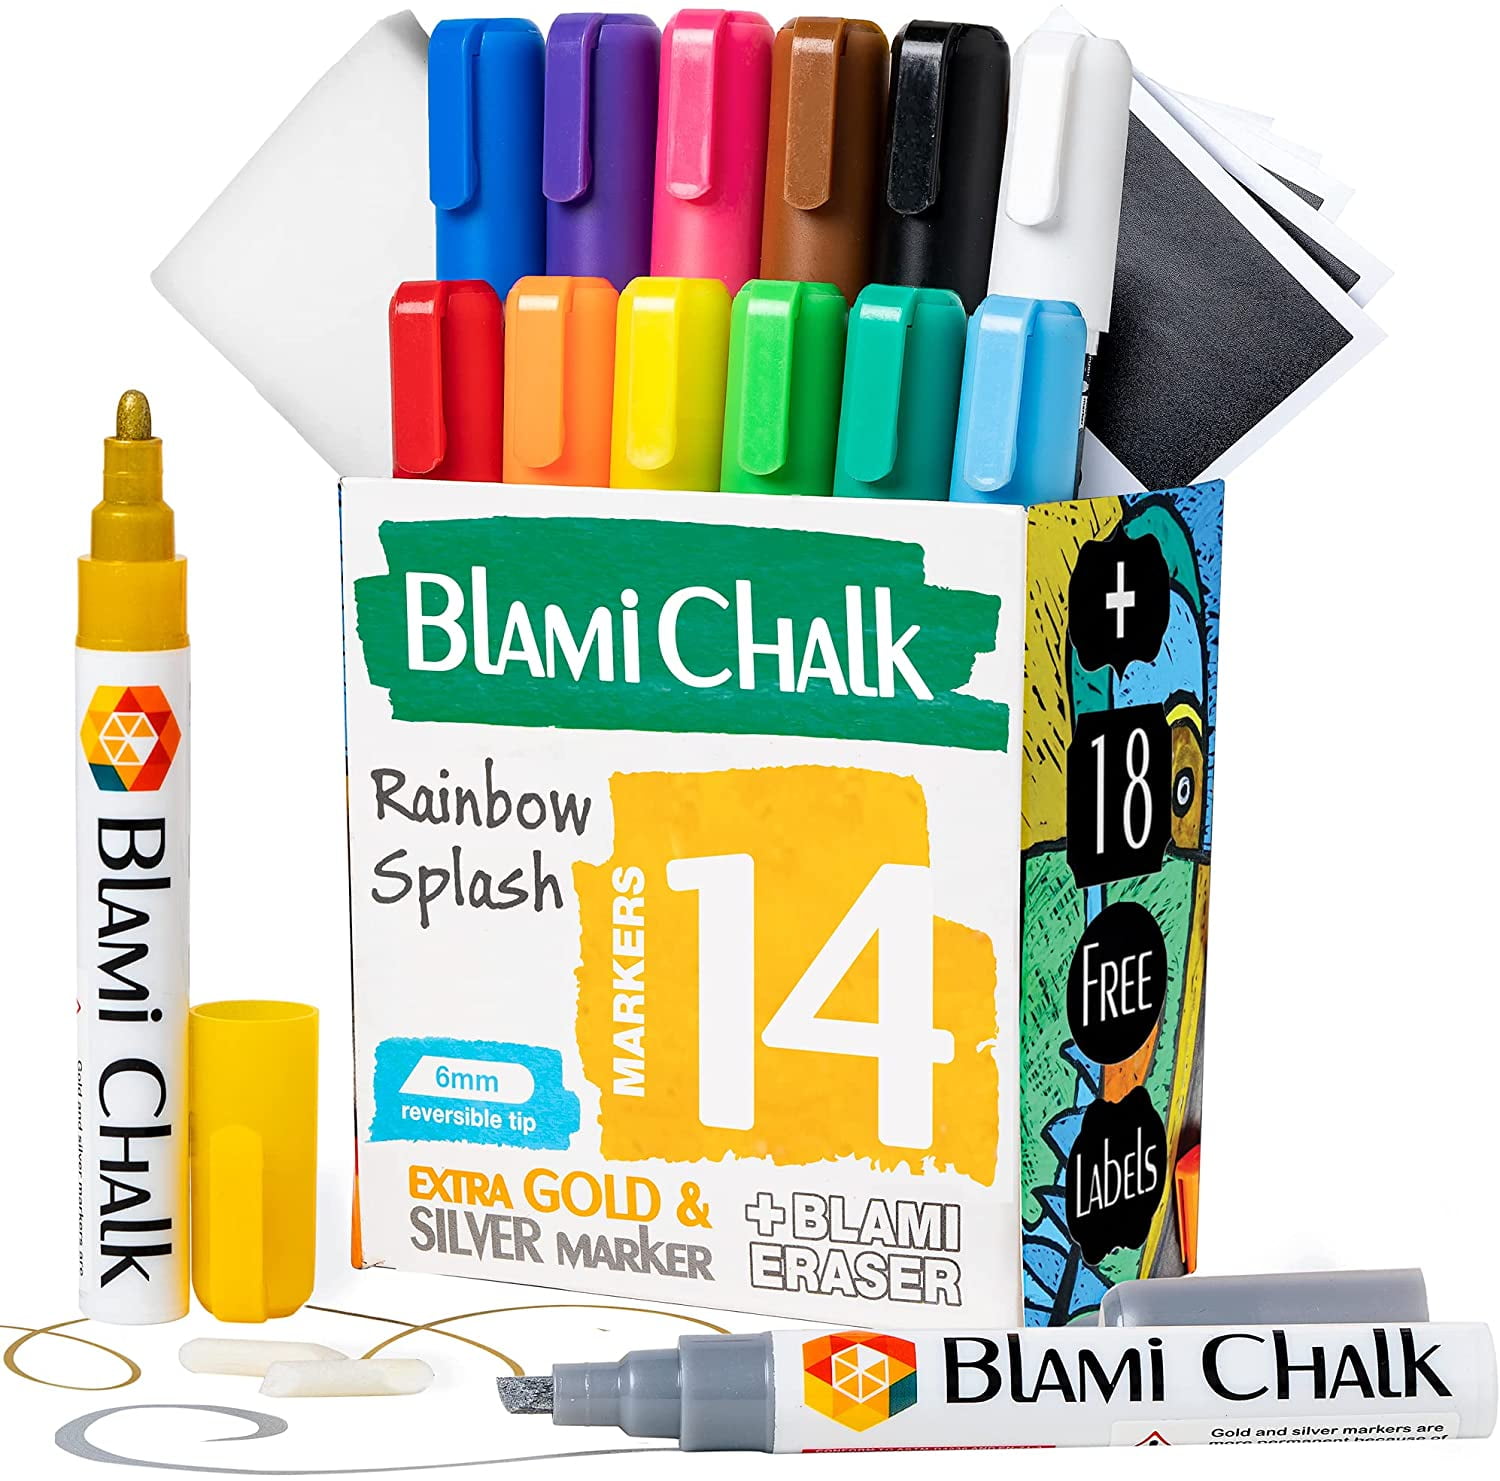 Advanced Pack 12Color Liquid Chalk Markers Erasable Chalkboard Pens for  Kids Art